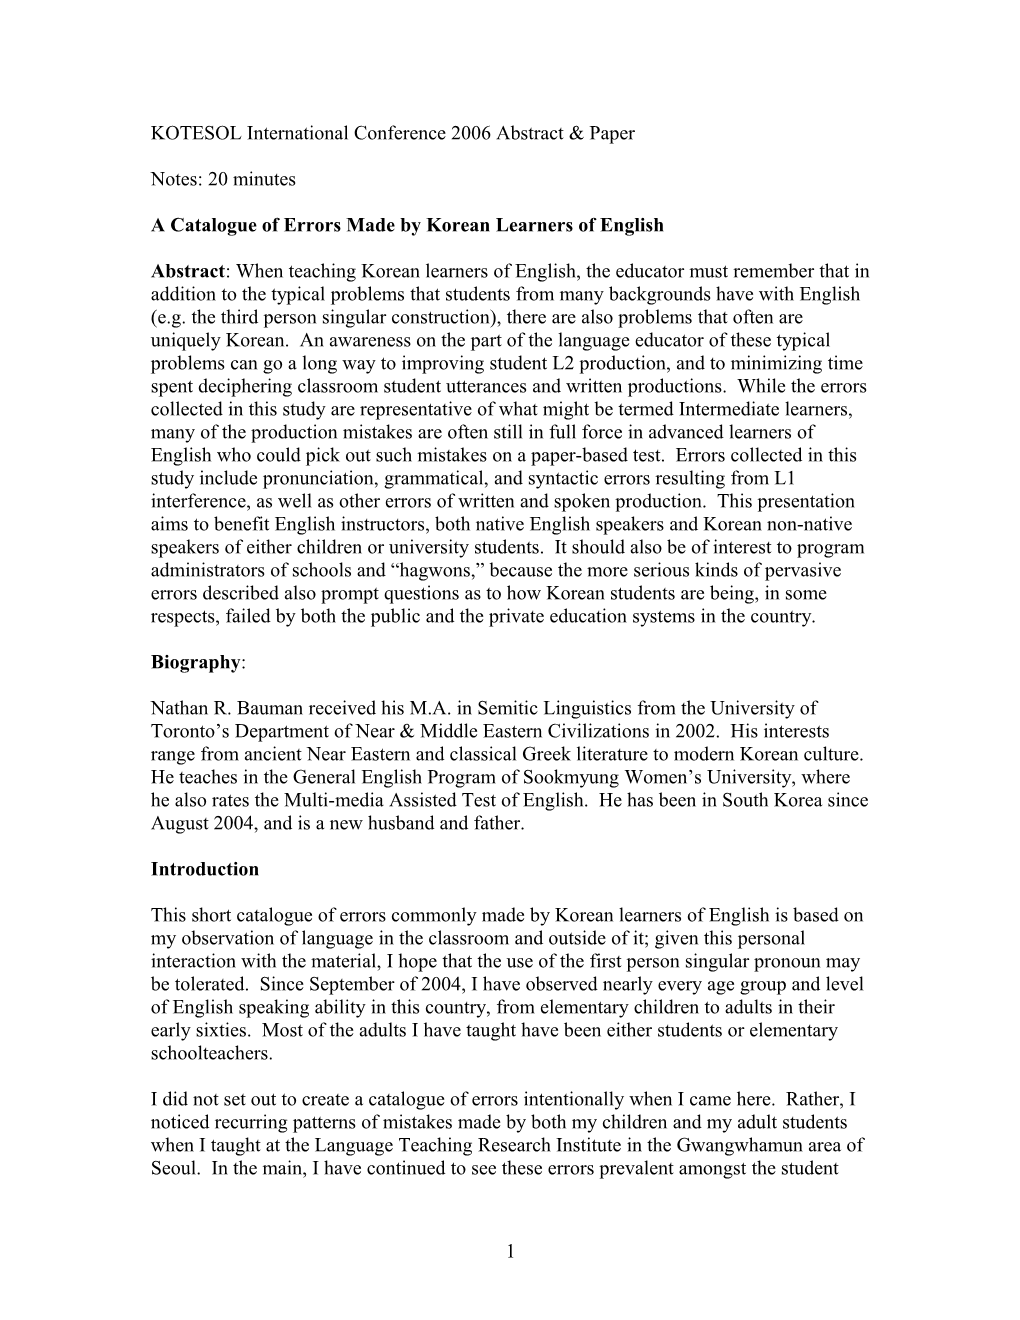 KOTESOL International Conference 2006 Proposal & Paper